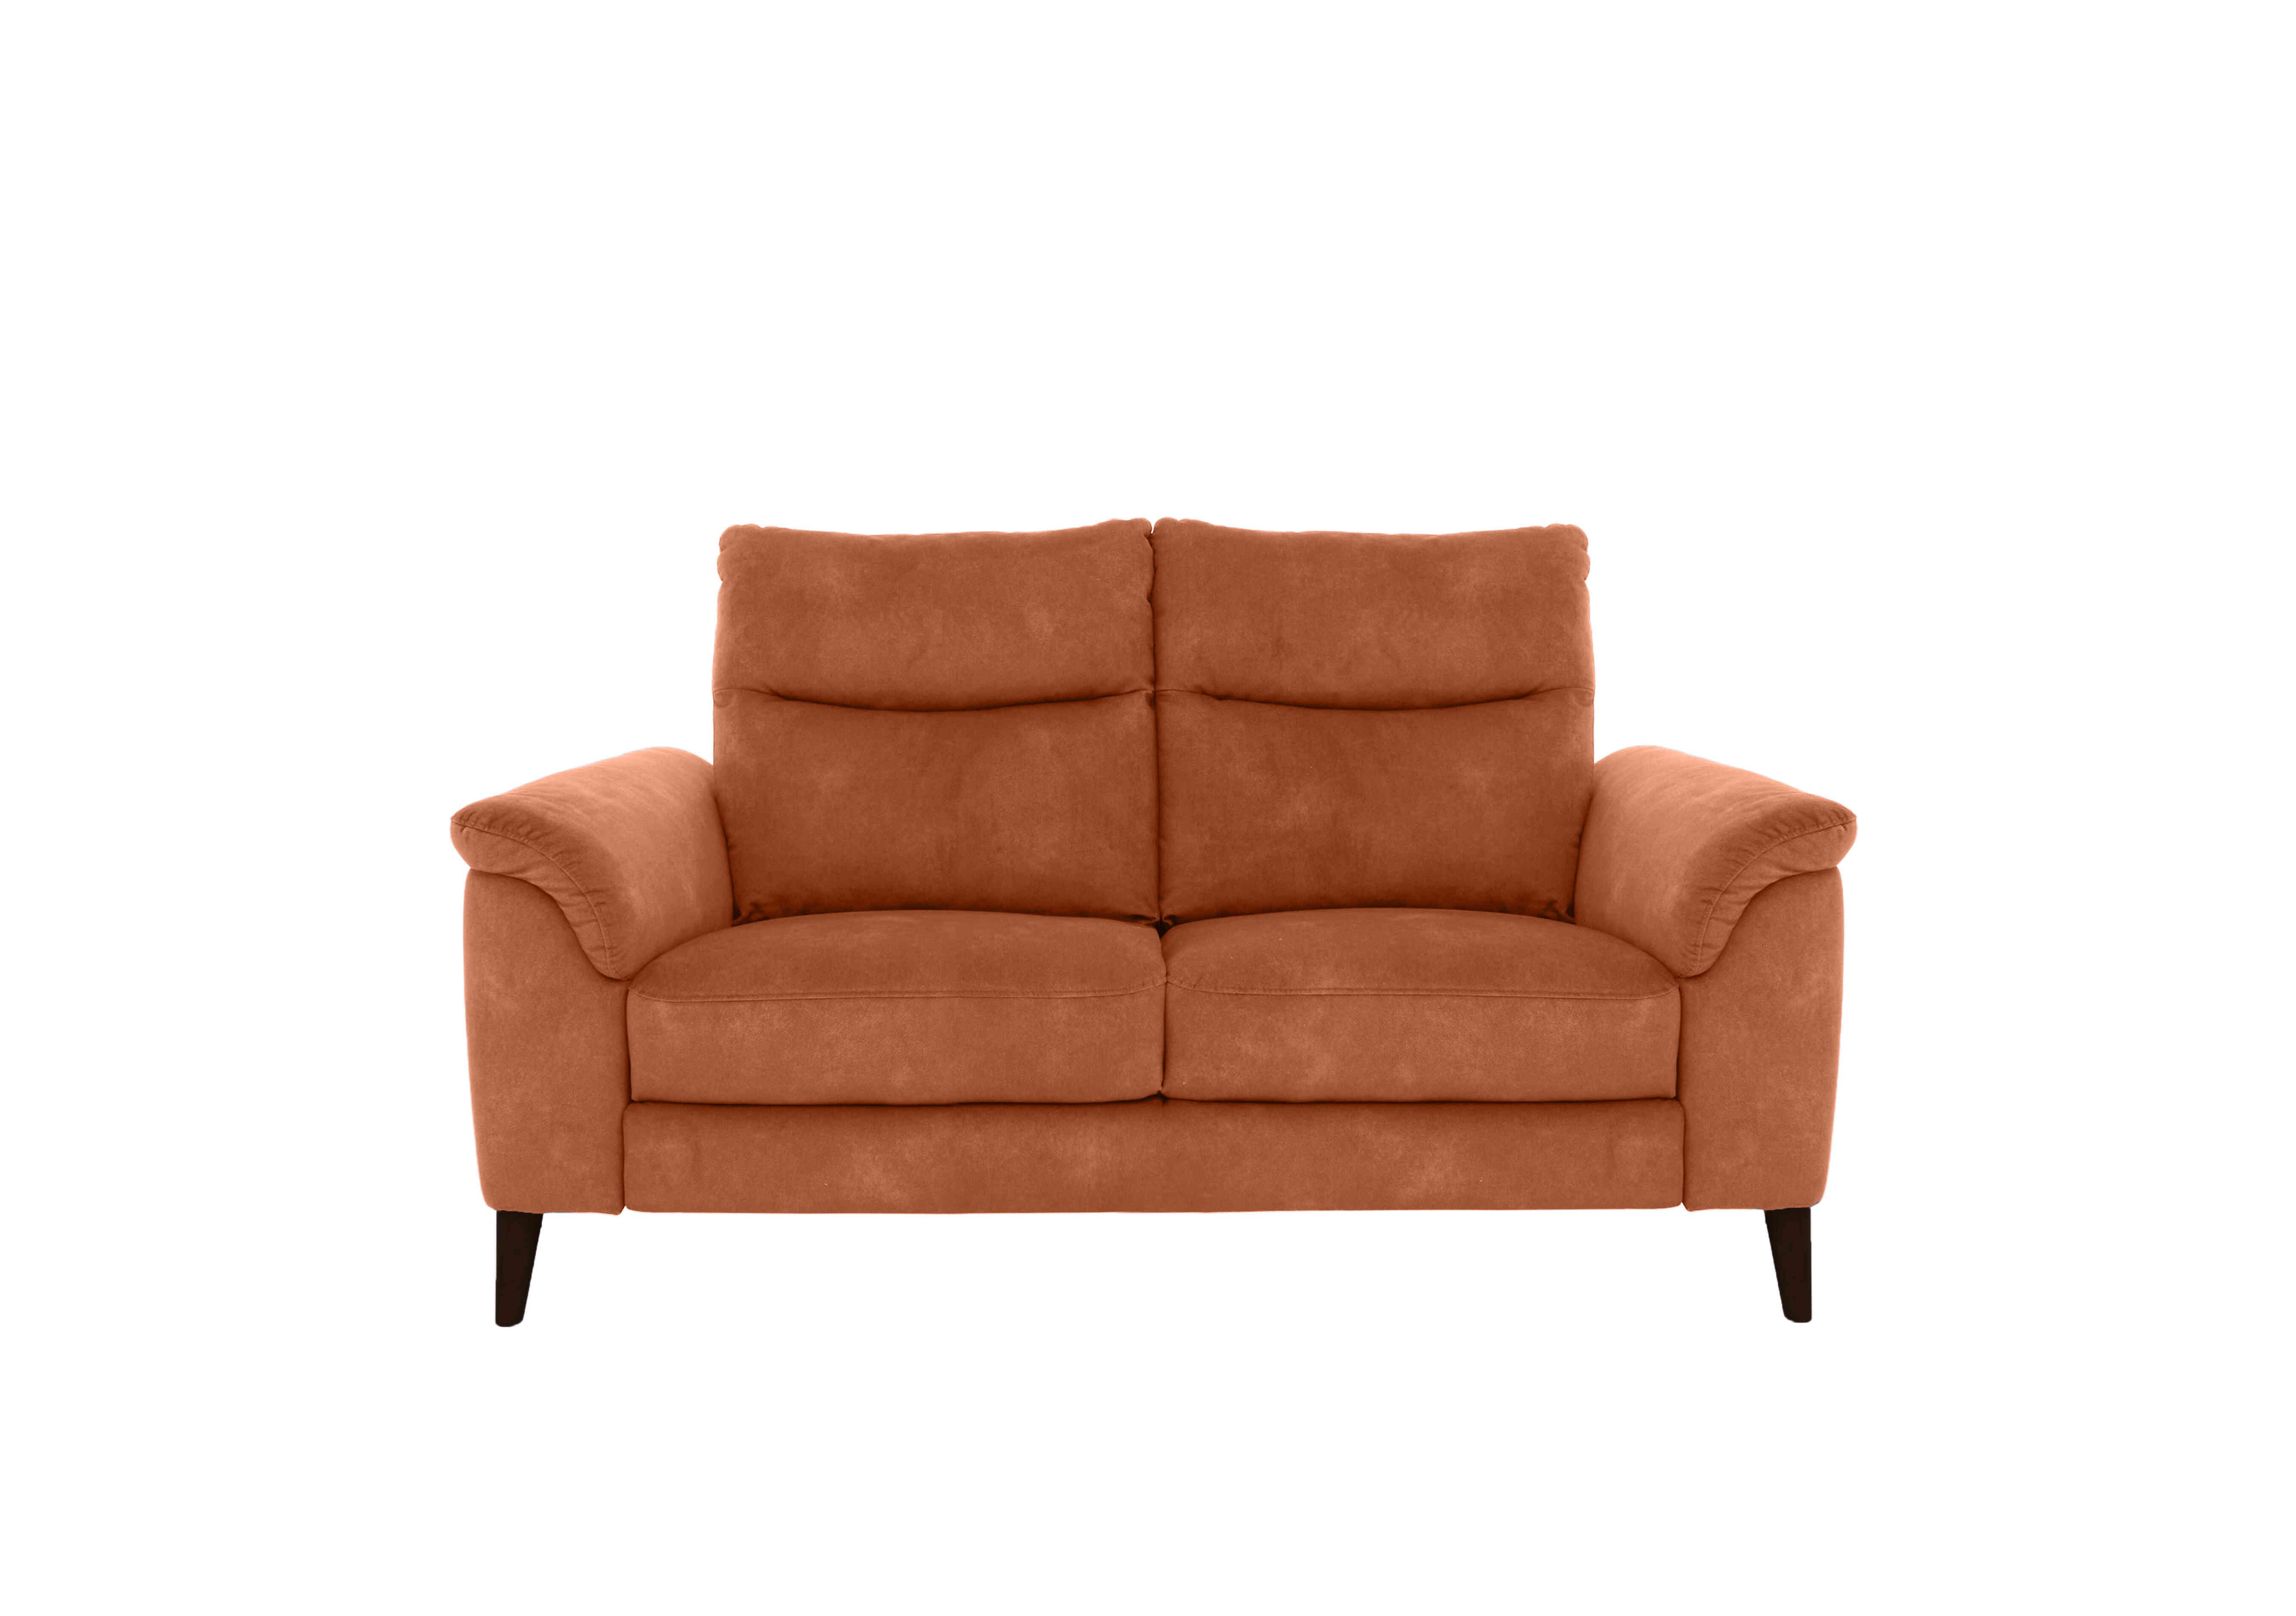 Morgan 2 Seater Fabric Sofa in Pumpkin Dexter 09 43509 on Furniture Village